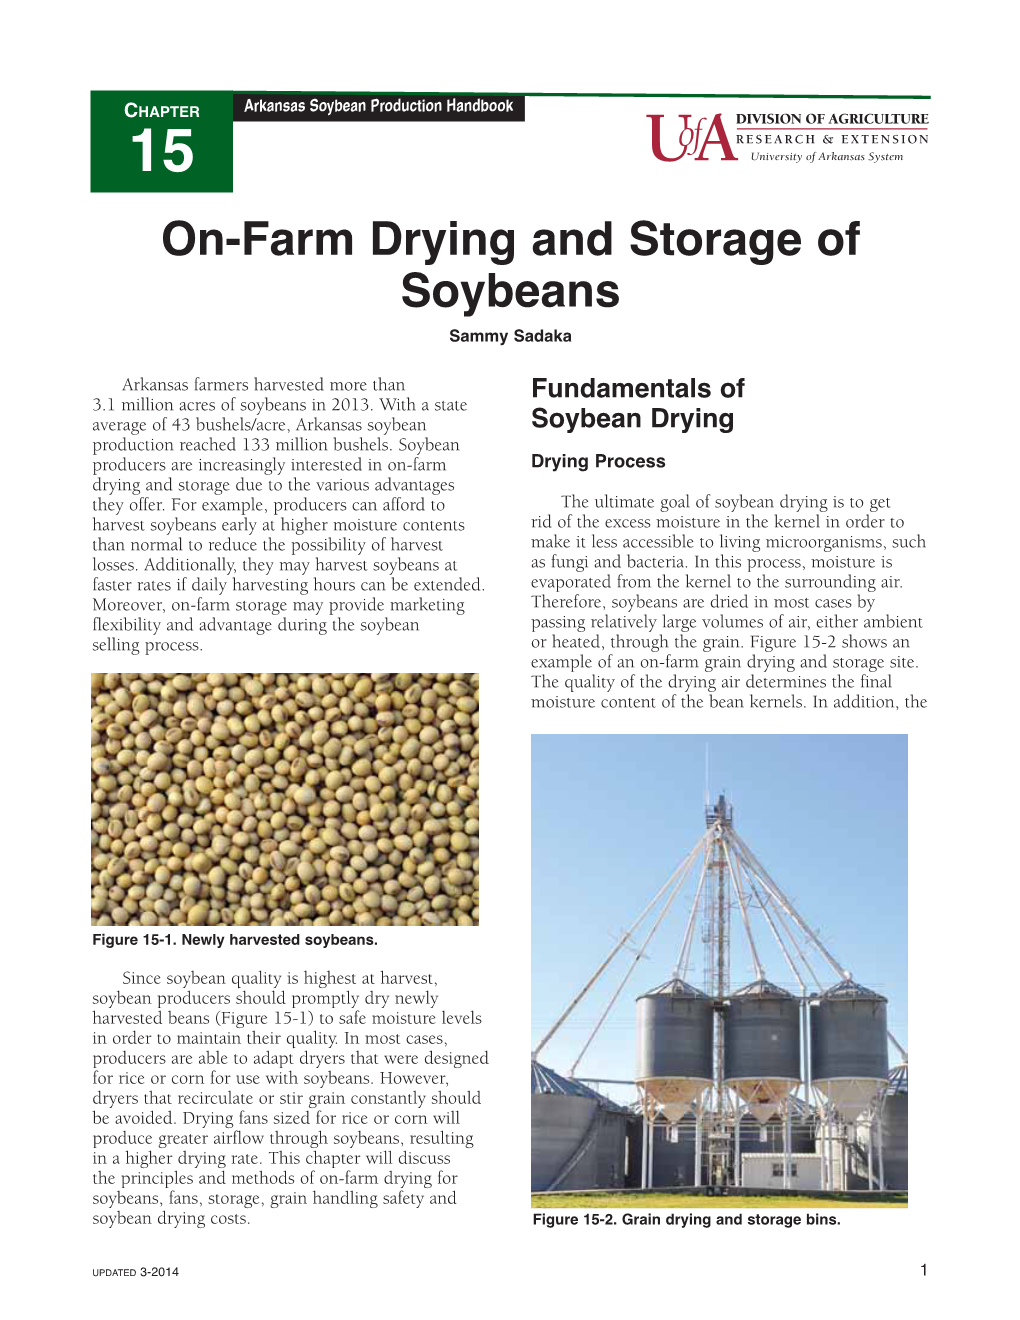 On-Farm Drying and Storage of Soybeans Sammy Sadaka